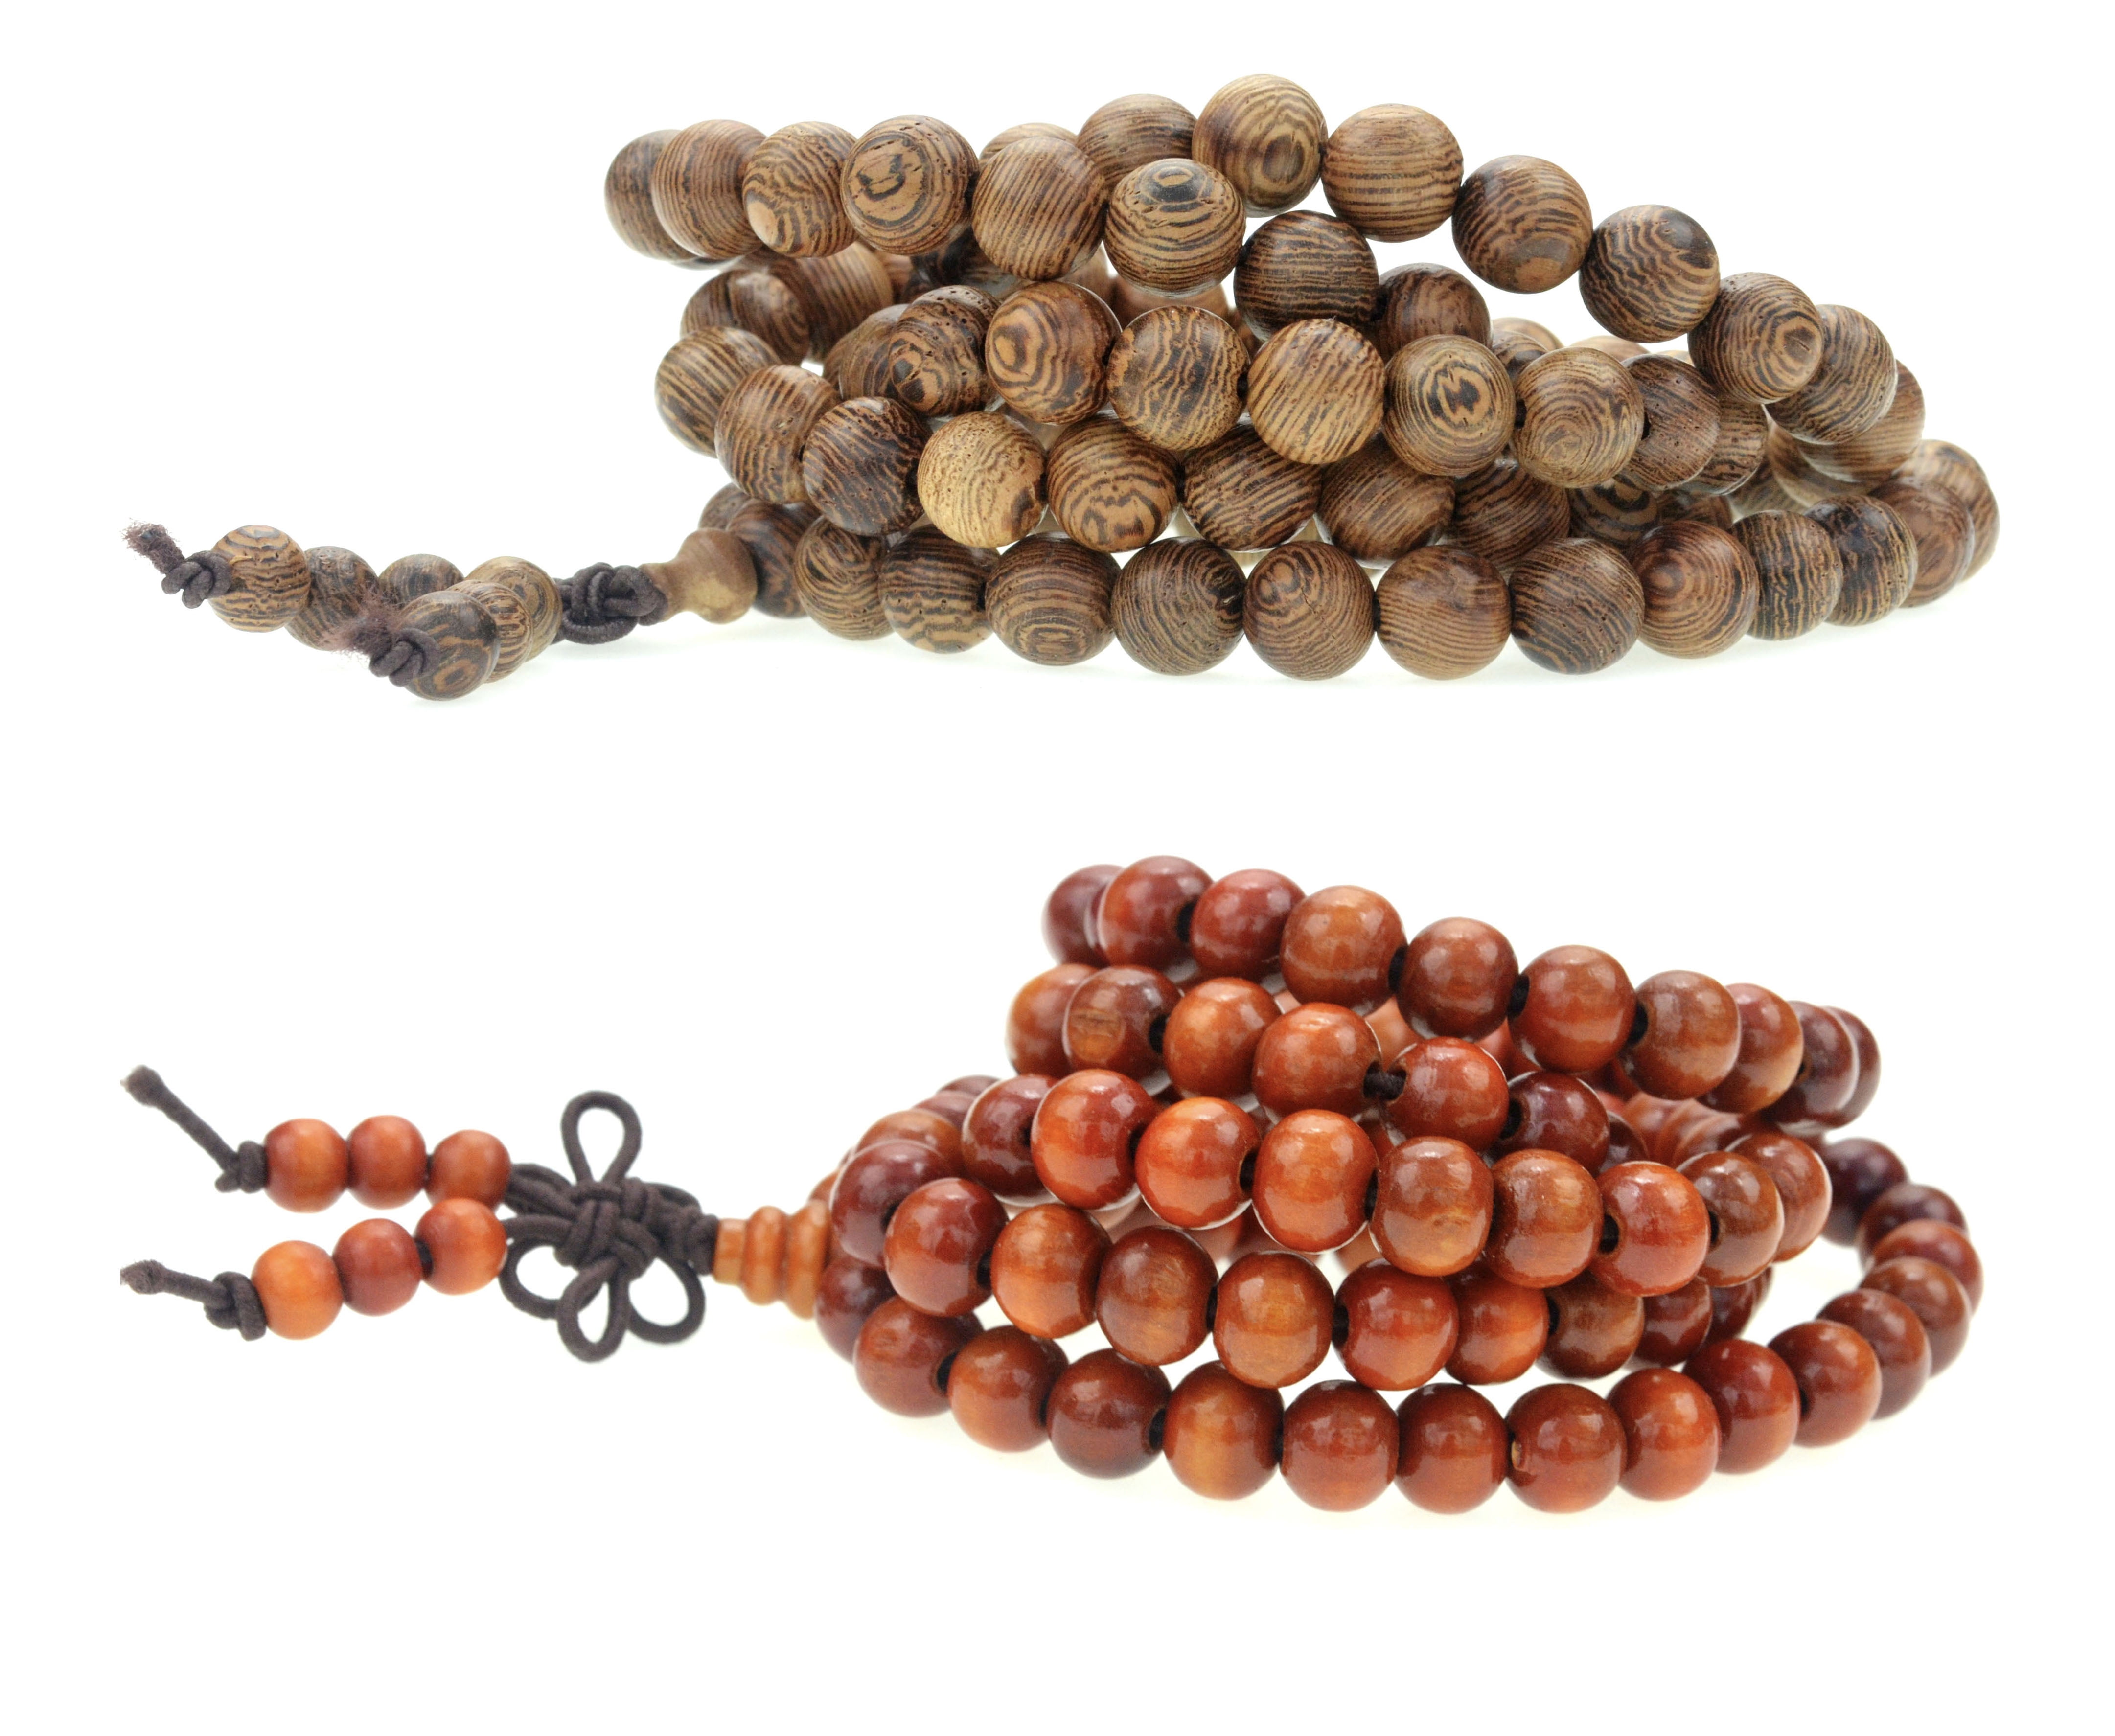 27 Bead Healing Yoga Bracelet for Women & Men Stretch Band Aspen & Eve Mala & Mindfulness Gemstone Bracelet 8mm Beads.